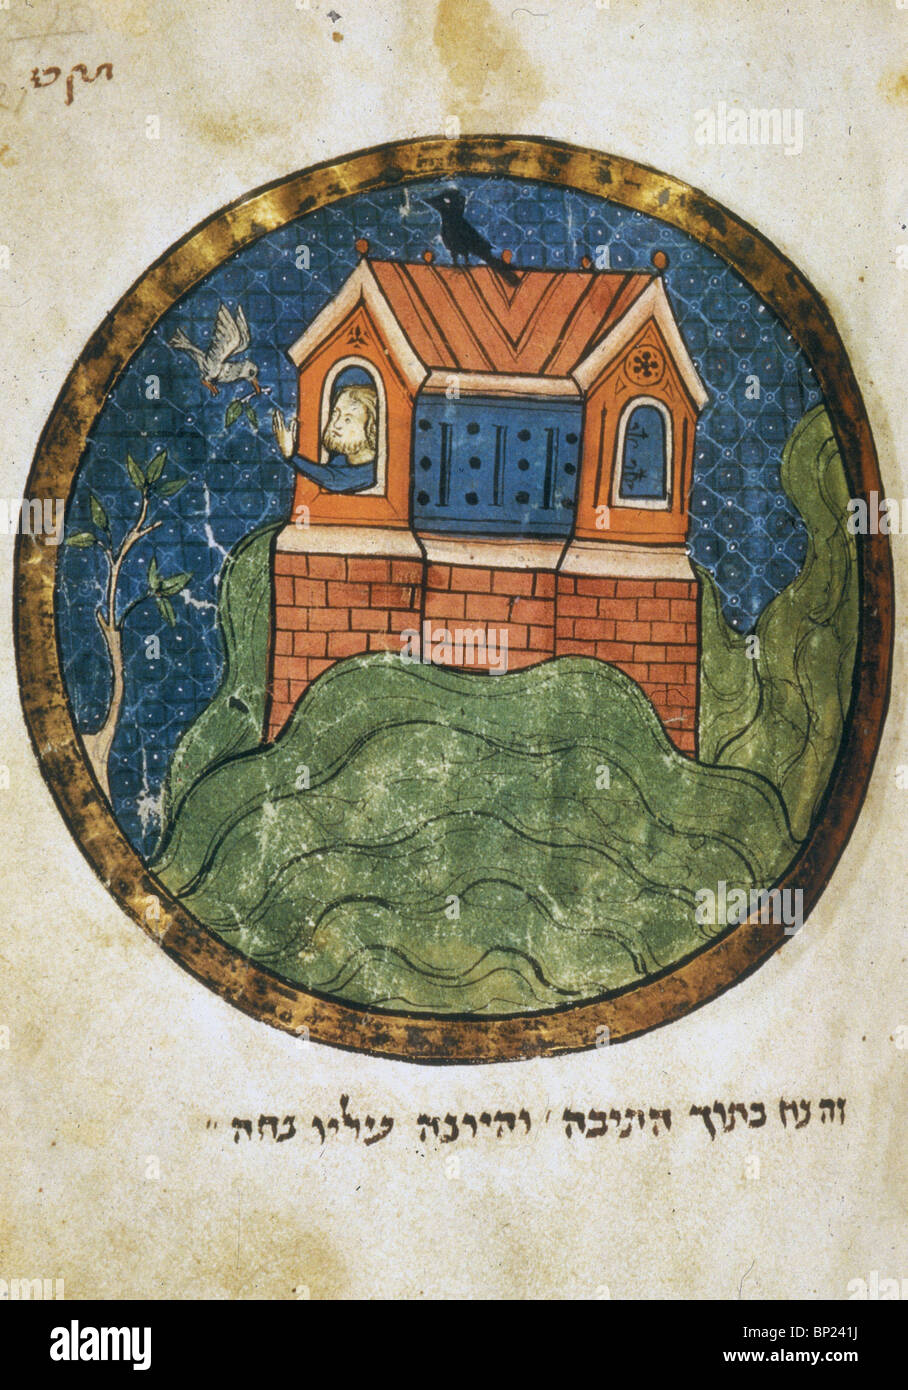 345. NOAH'S ARK, manuscrito hebreo del norte de Francia, C. 1280 Foto de stock